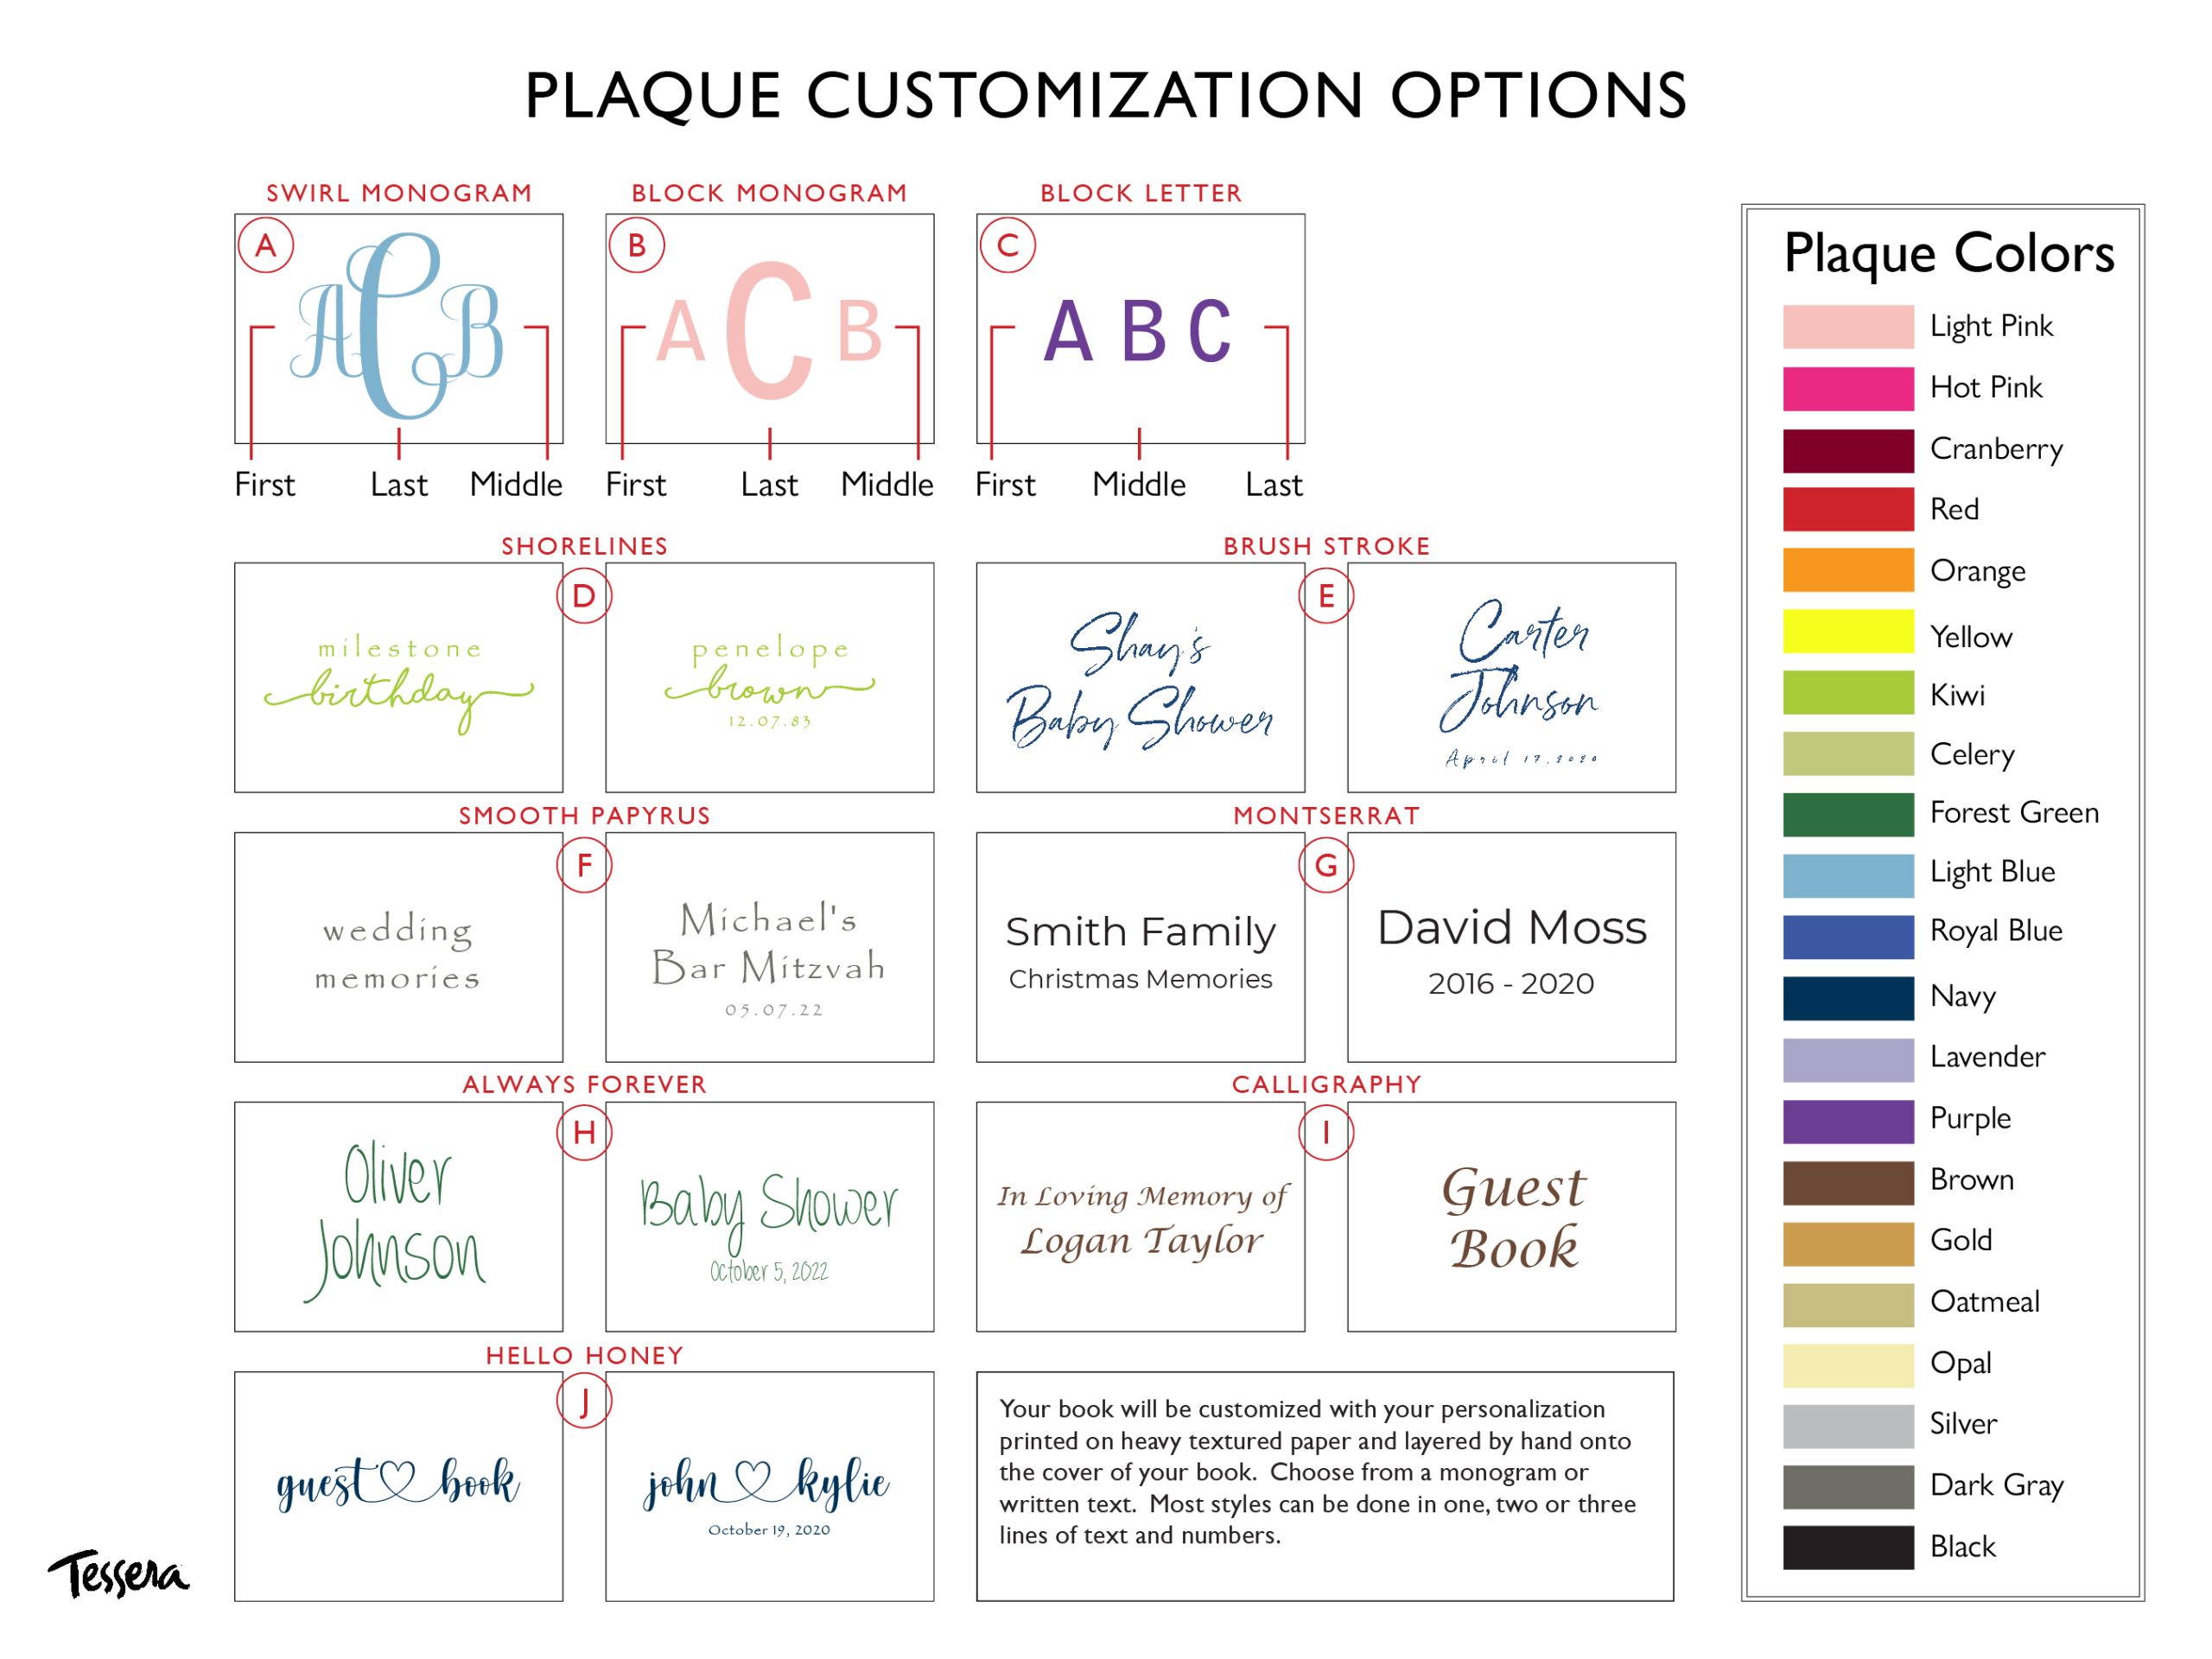 Plaque customization options